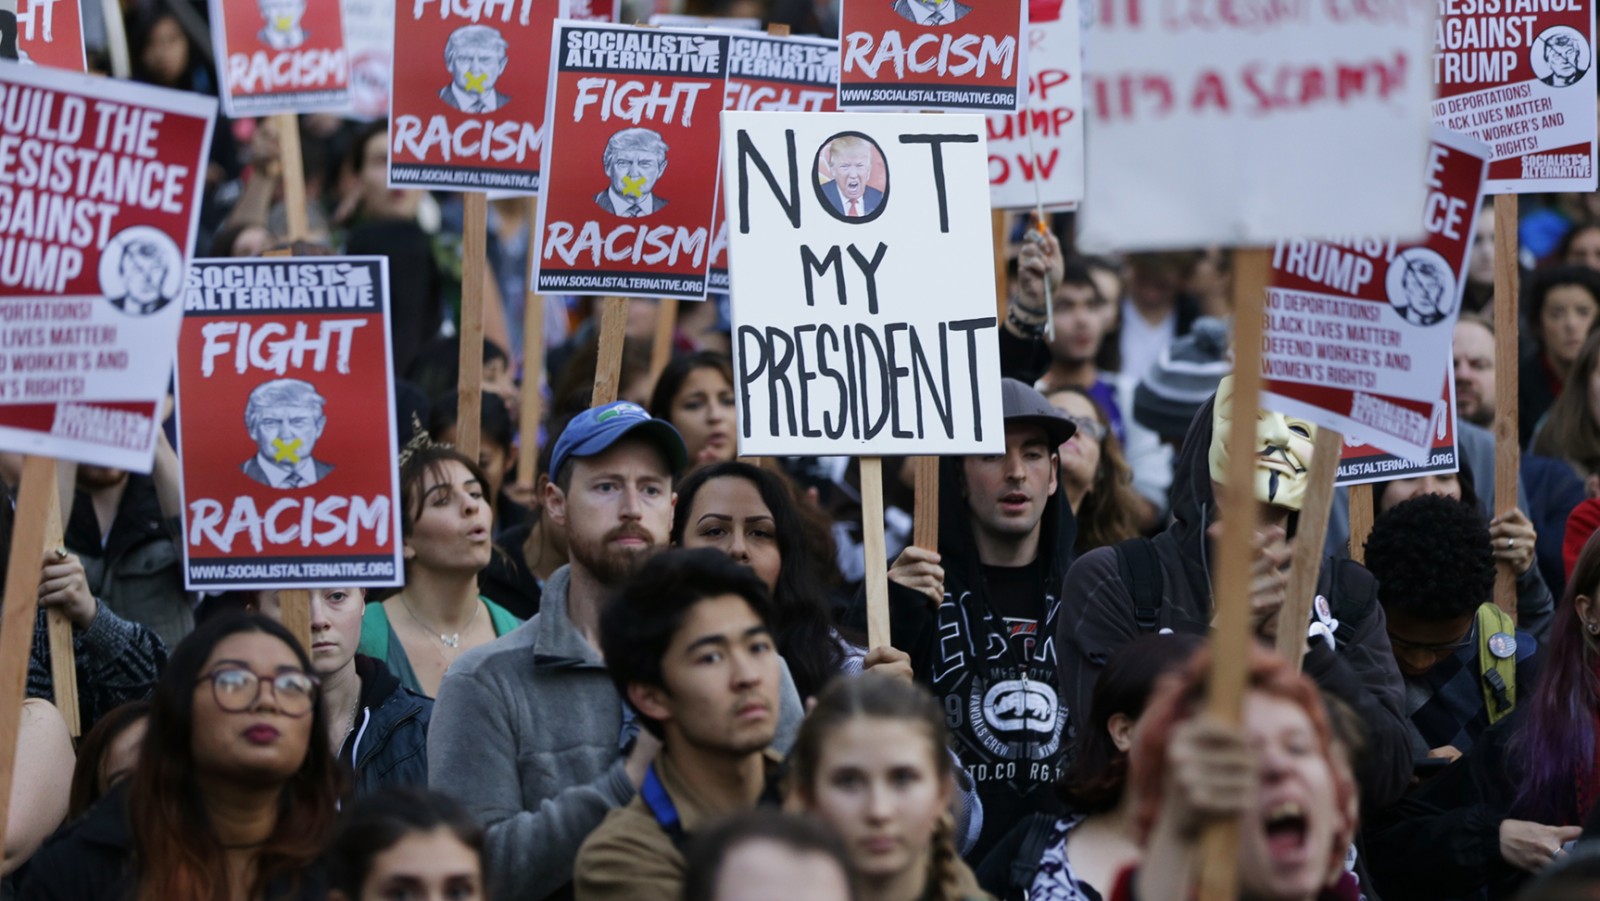 הפגנה נגד הנשיא הנבחר דונלד טראמפ בסיאטל (צילום: סוכנות AP).